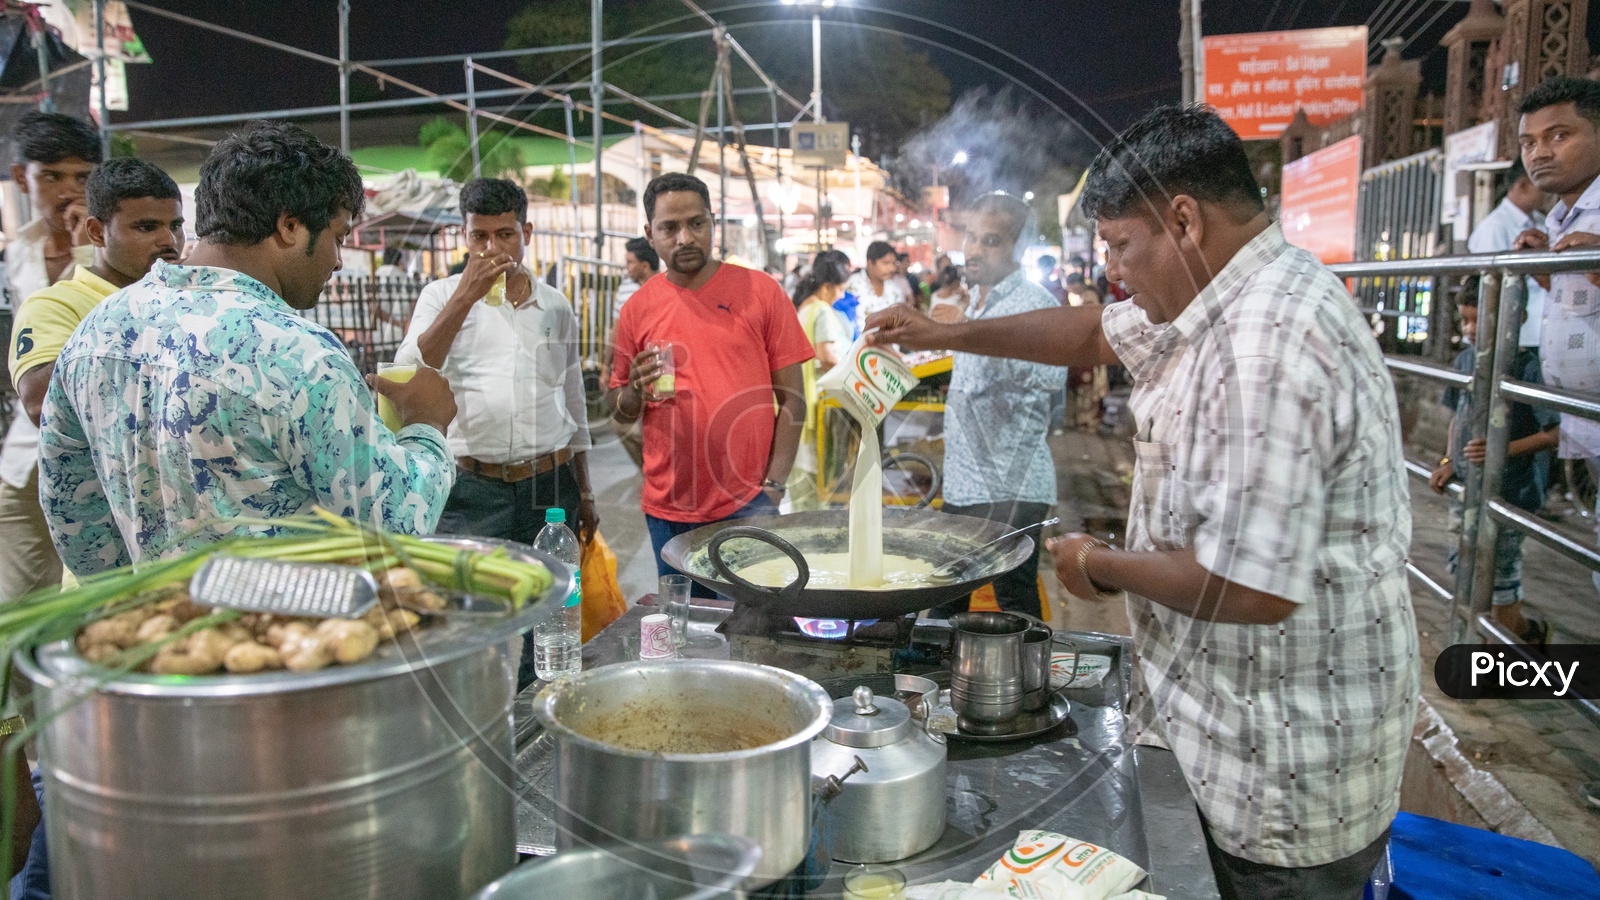 Hot Badam / Almond milk Vendor in a Street